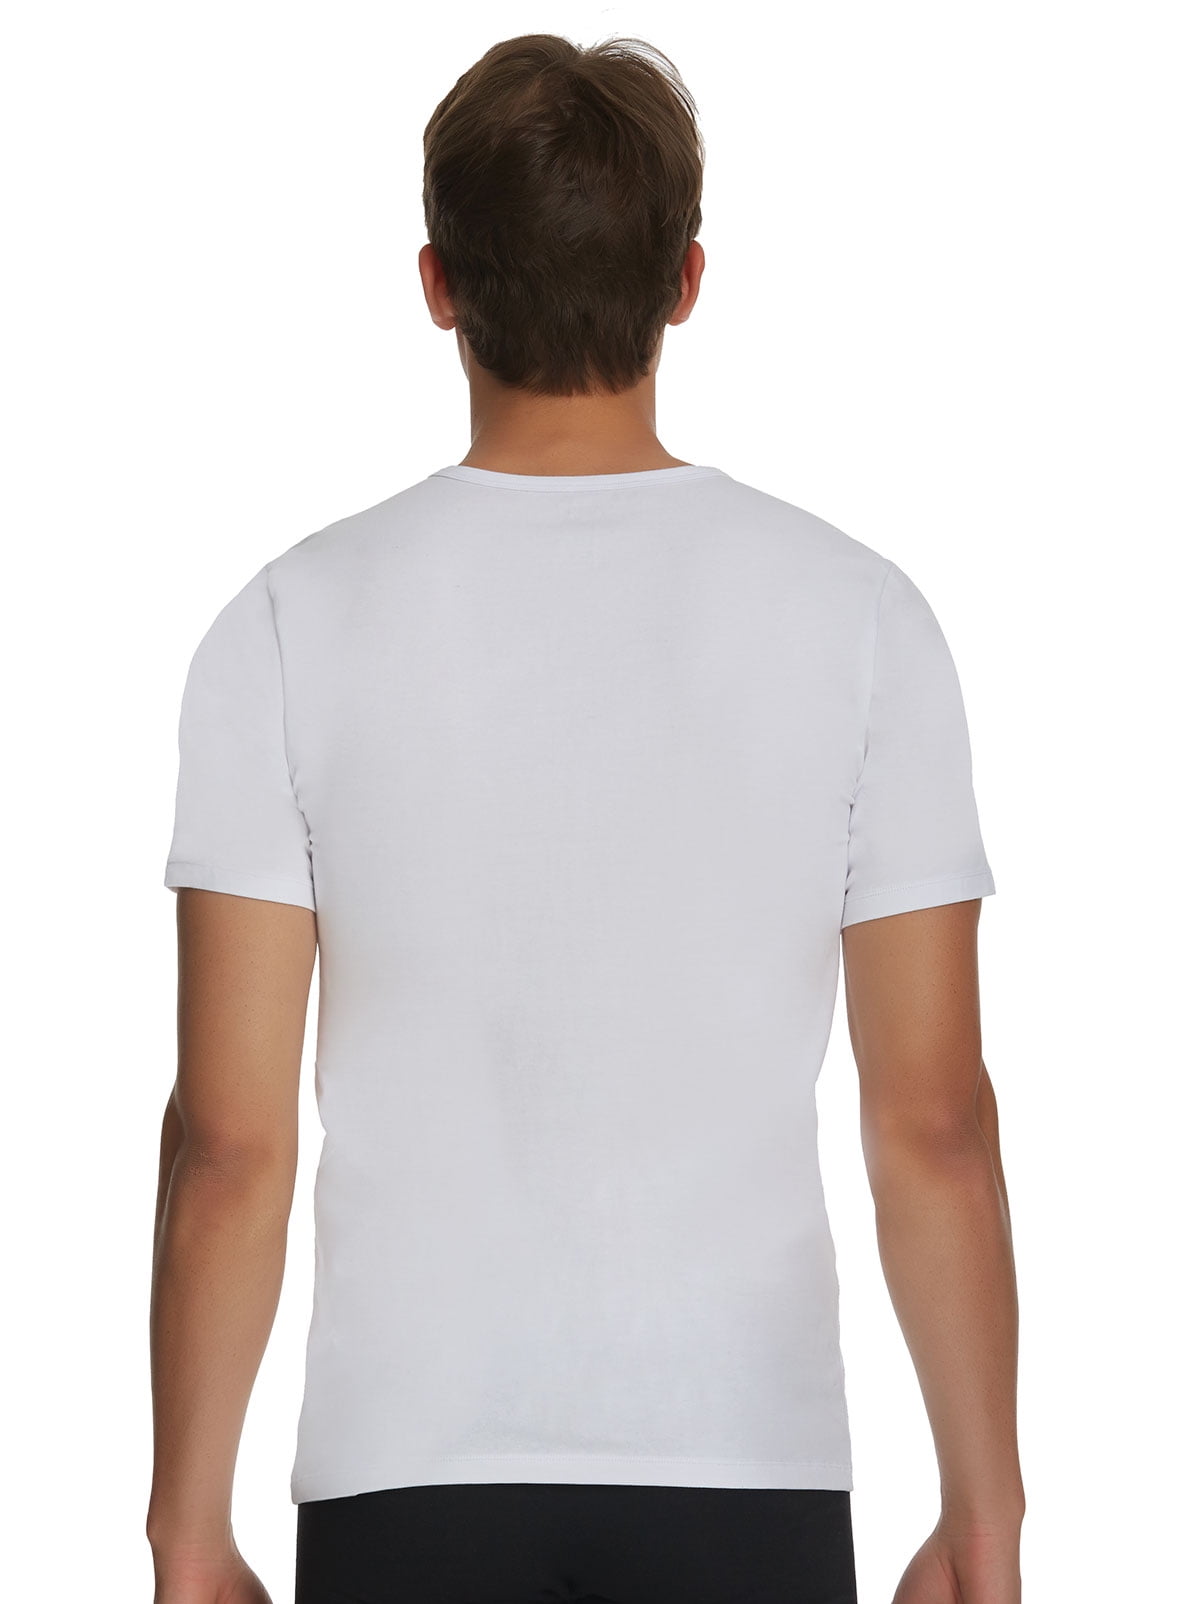 Buffalo David Bitton | 3-Pack Men's White Crew Neck T-Shirt | 100% Cotton |  Tagless (White, Medium)